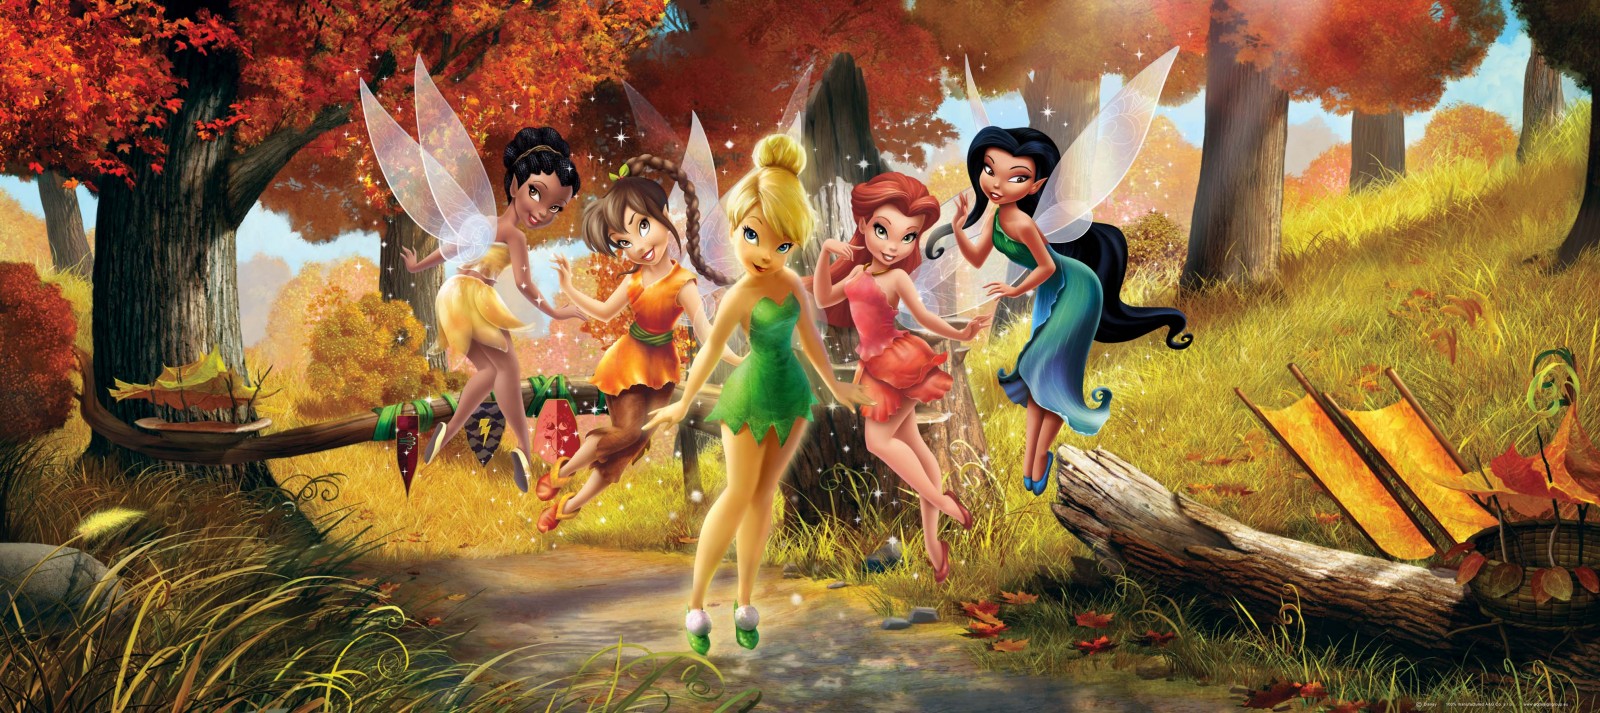 Wall mural wallpaper Disney Tinkerbell and friends fairies fairy.